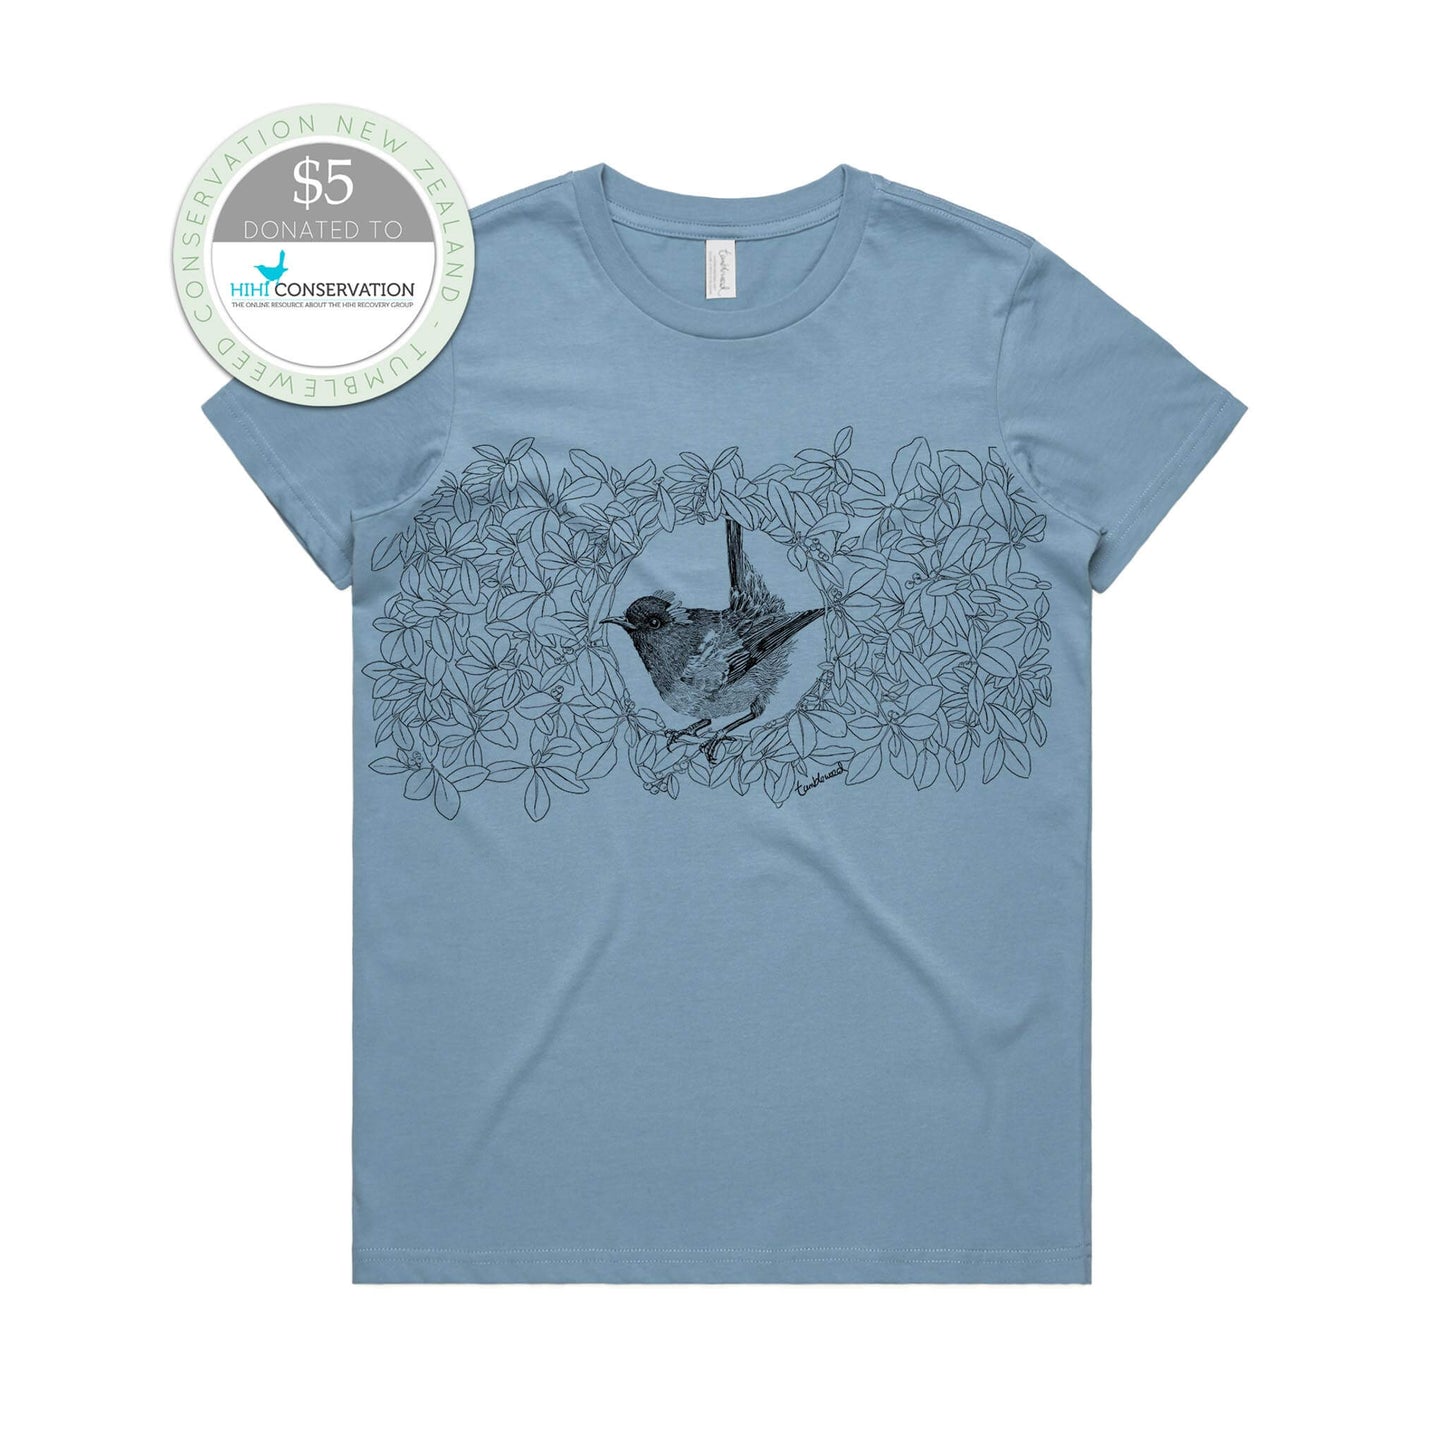 Hihi/Stitchbird t-shirt